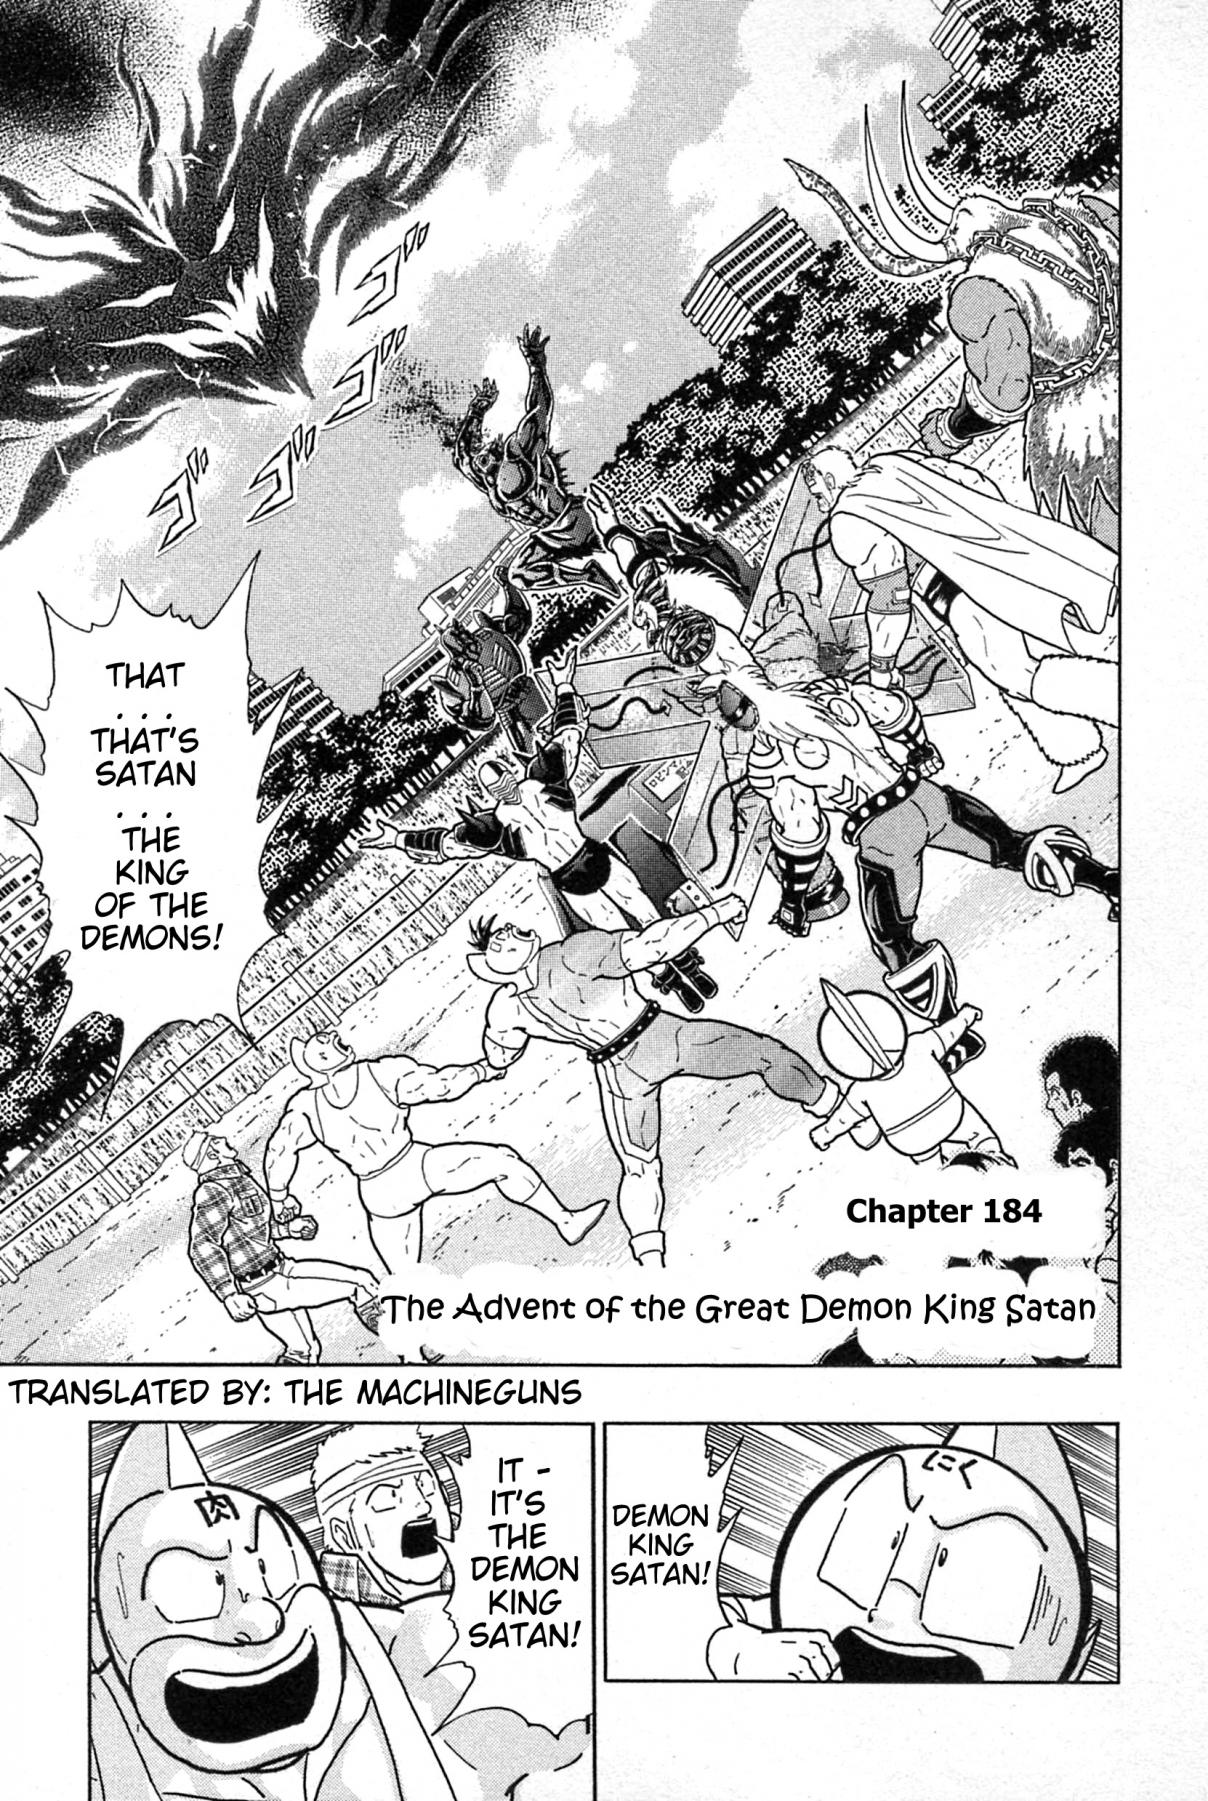 Kinnikuman II Sei: Kyuukyoku Choujin Tag Hen Vol. 17 Ch. 184 The Advent of the Great Demon King Satan!